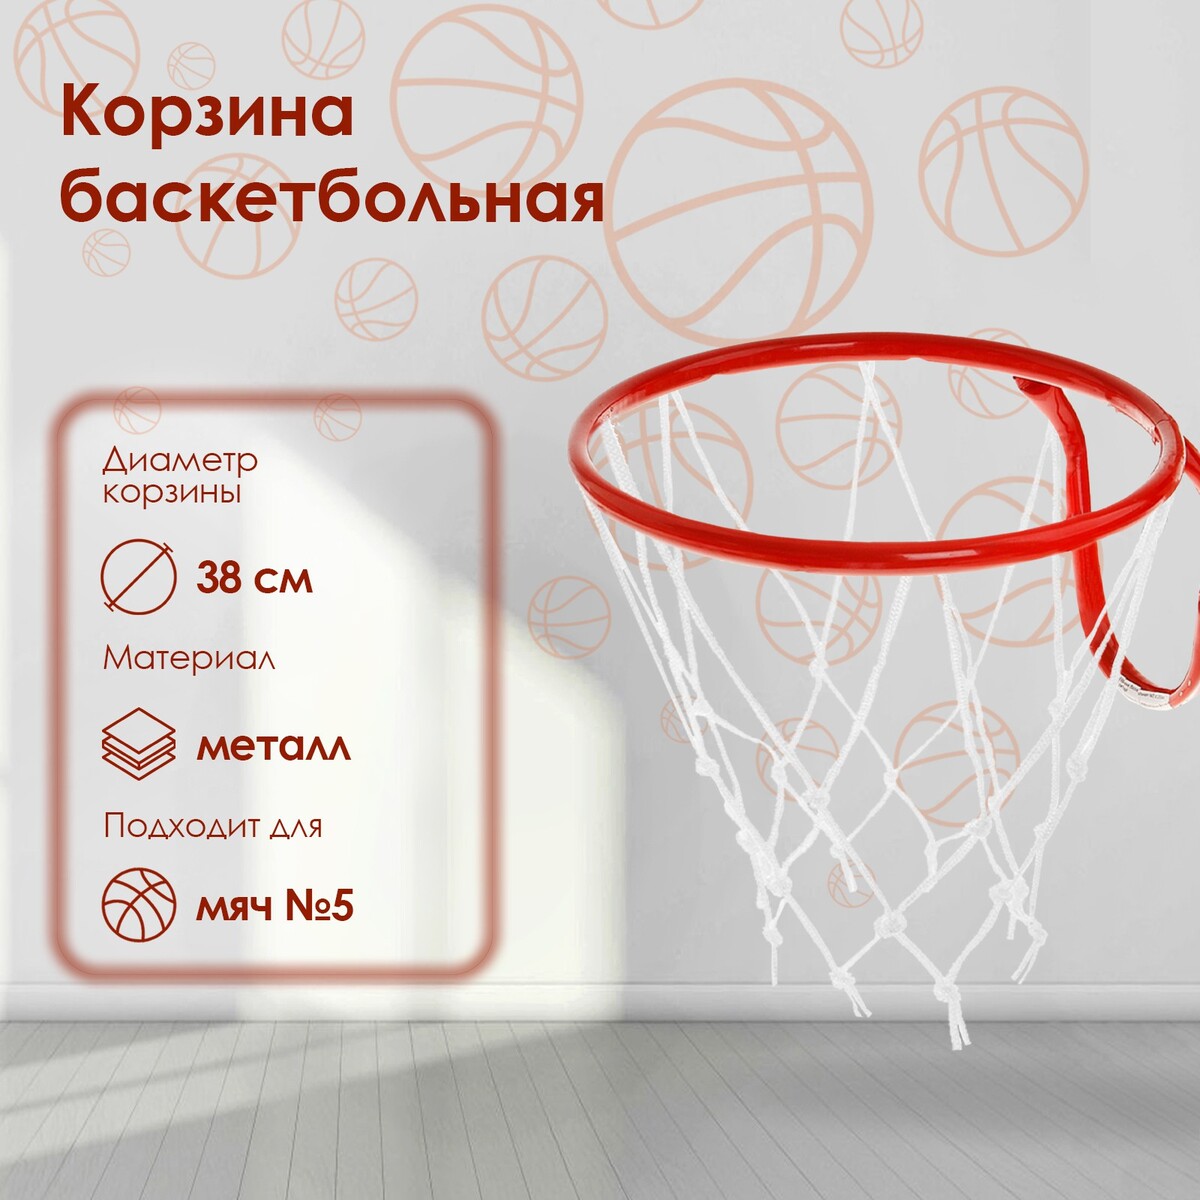 Корзина баскетбольная №5, d=380 мм, с сеткой No brand